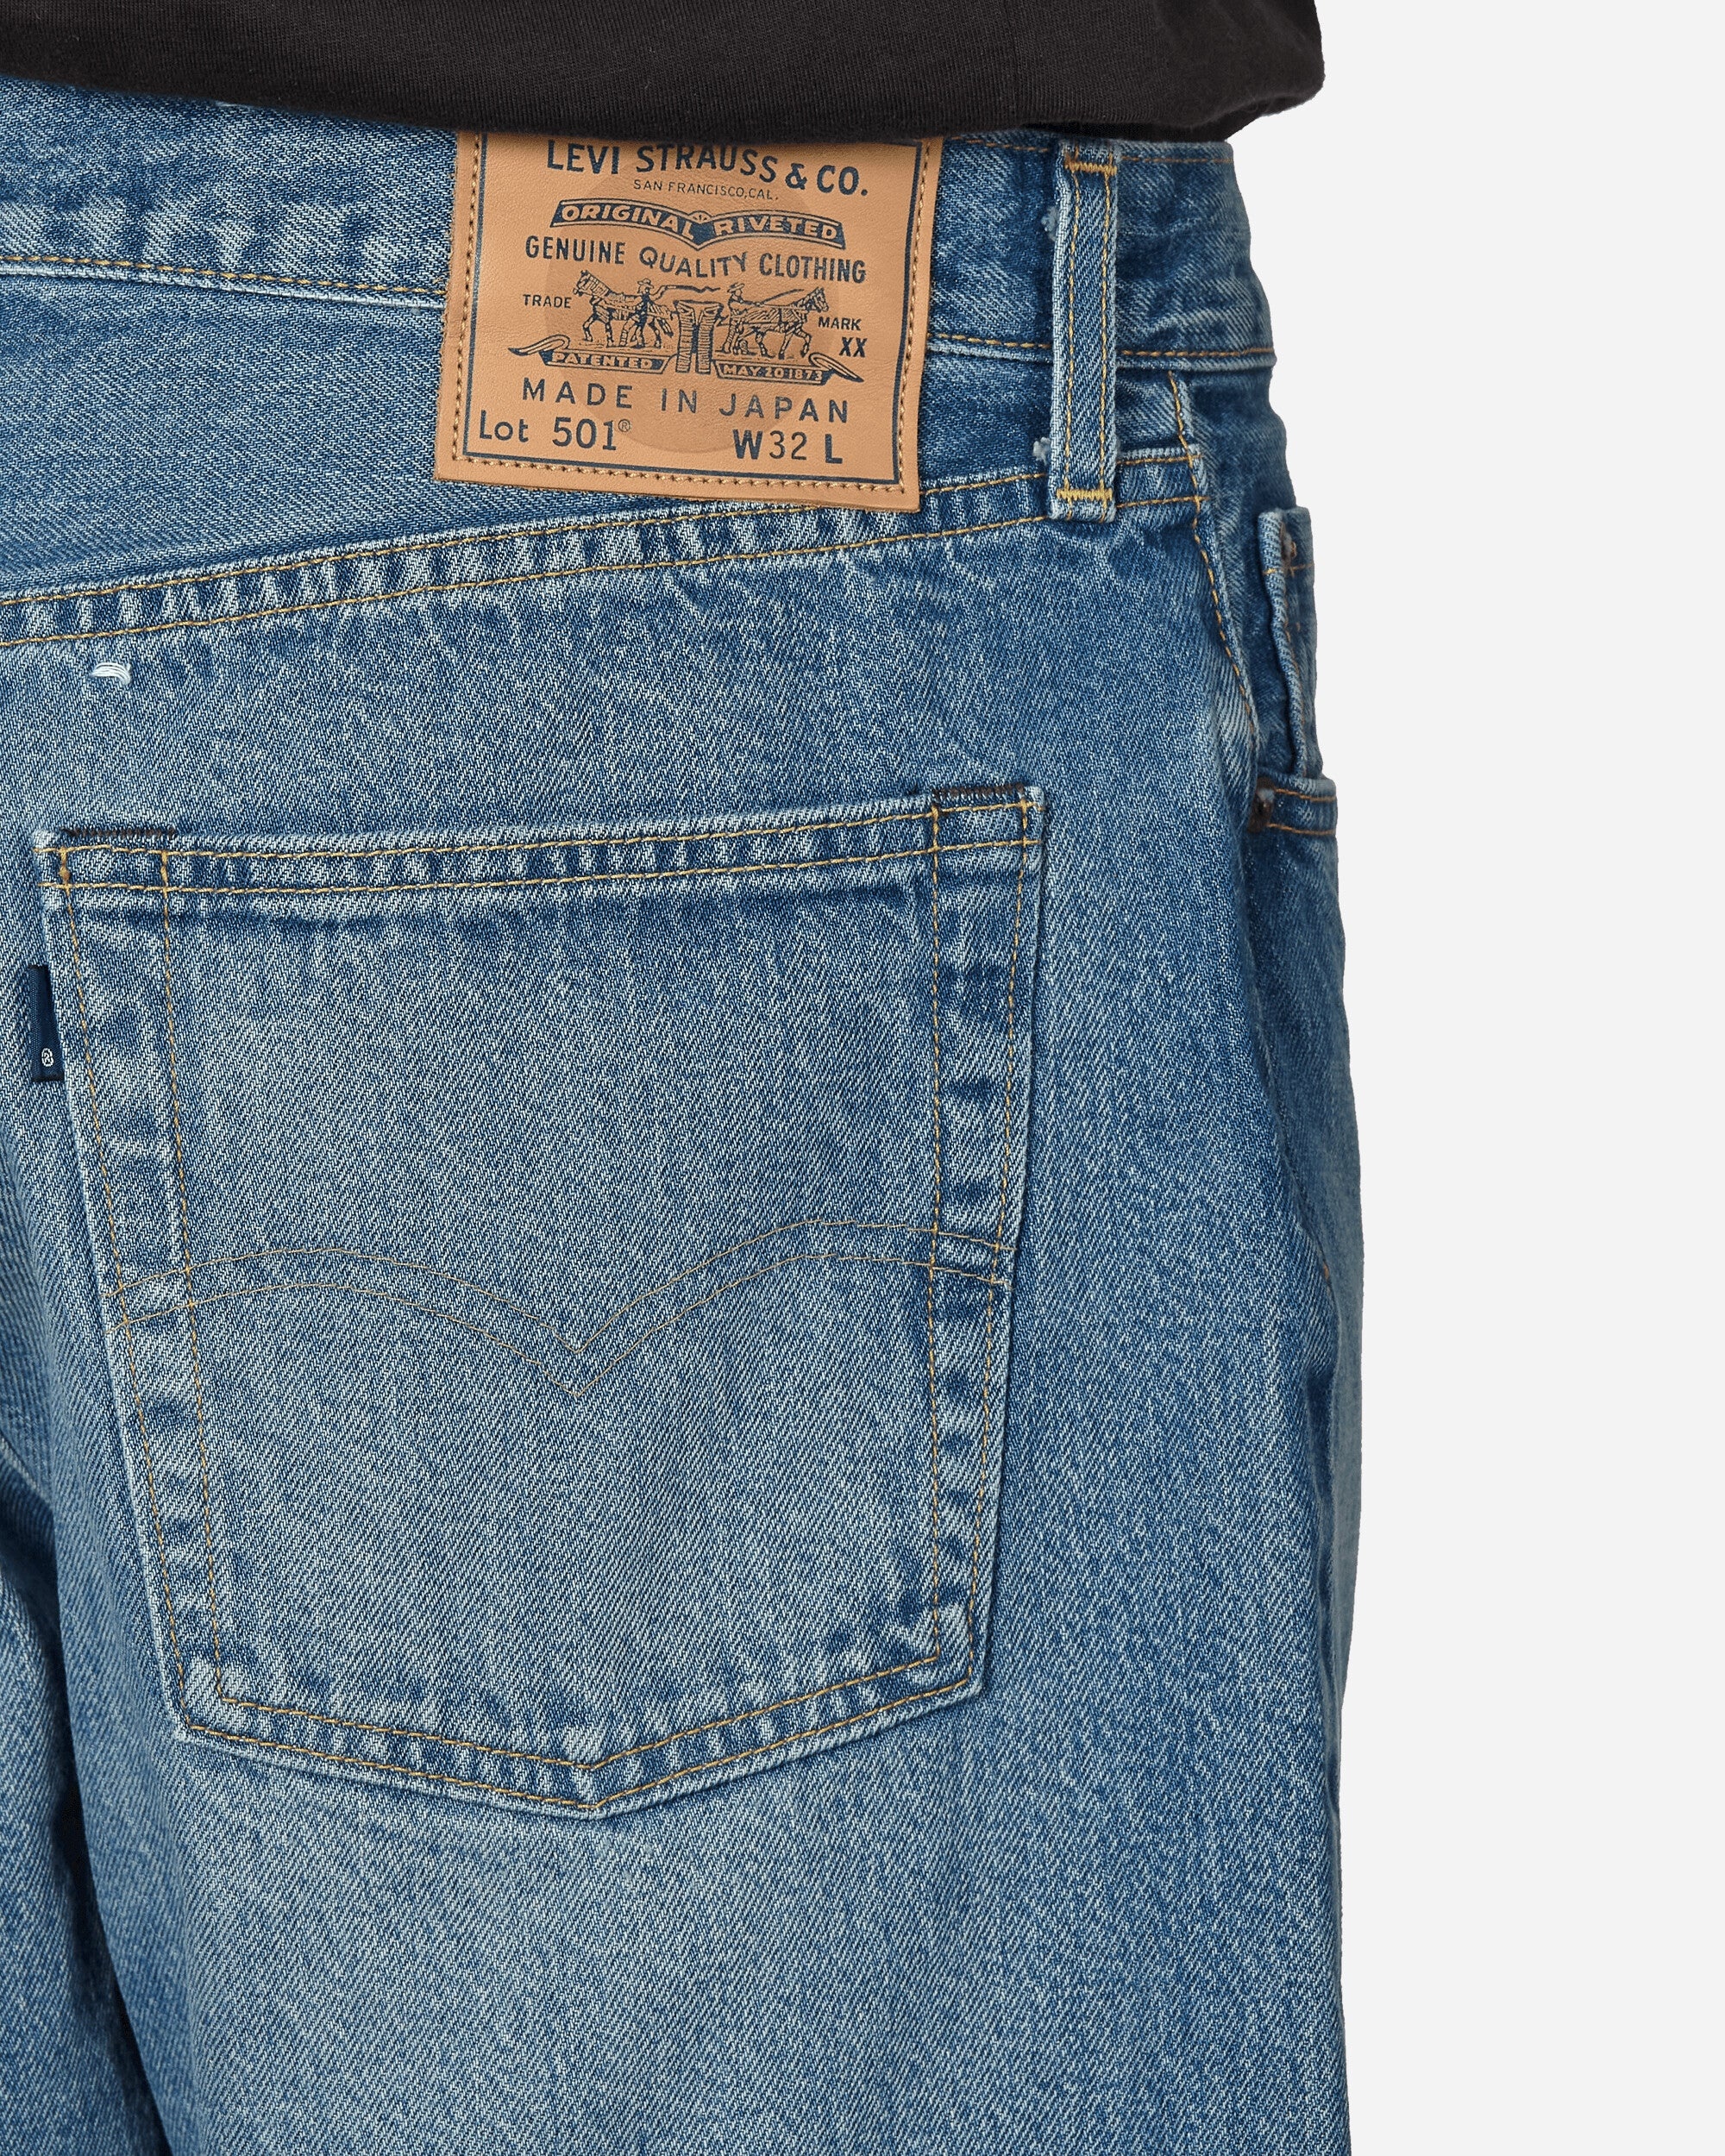 Made in Japan 1980's 501 Denim Shorts Blue - 5